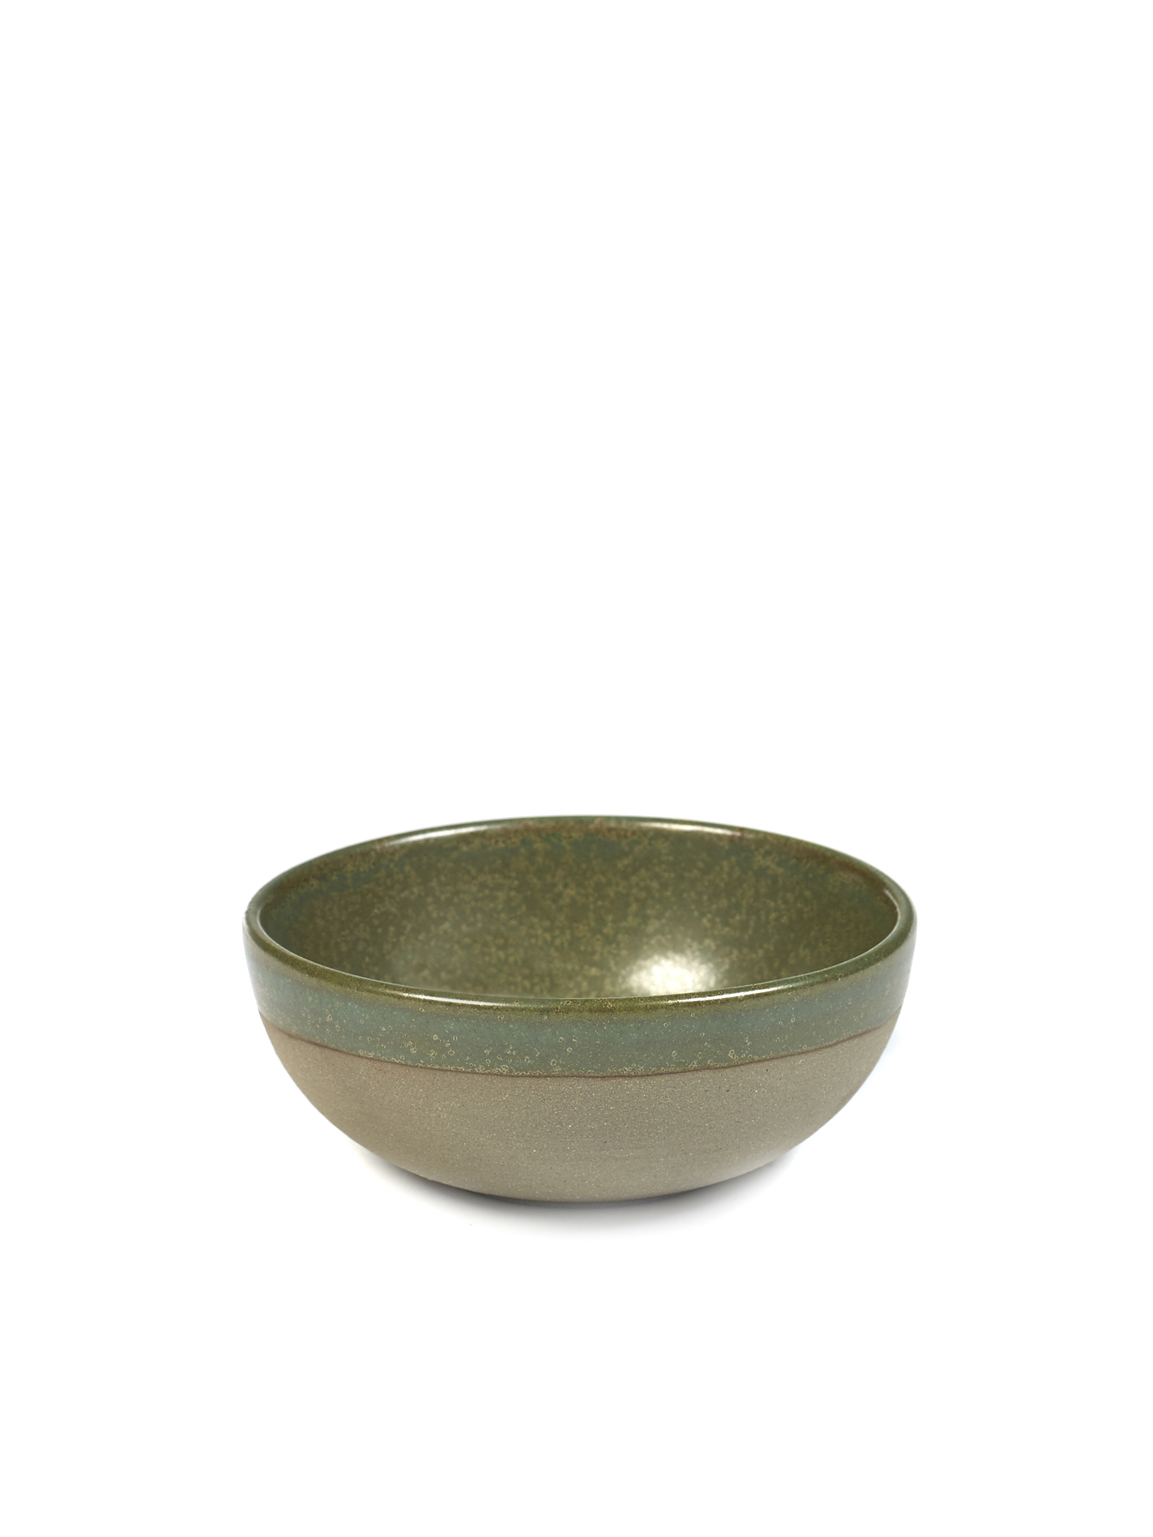 Sergio Herman for Serax Surface - Medium Bowl (11cm) Camo Green - 4 Pieces